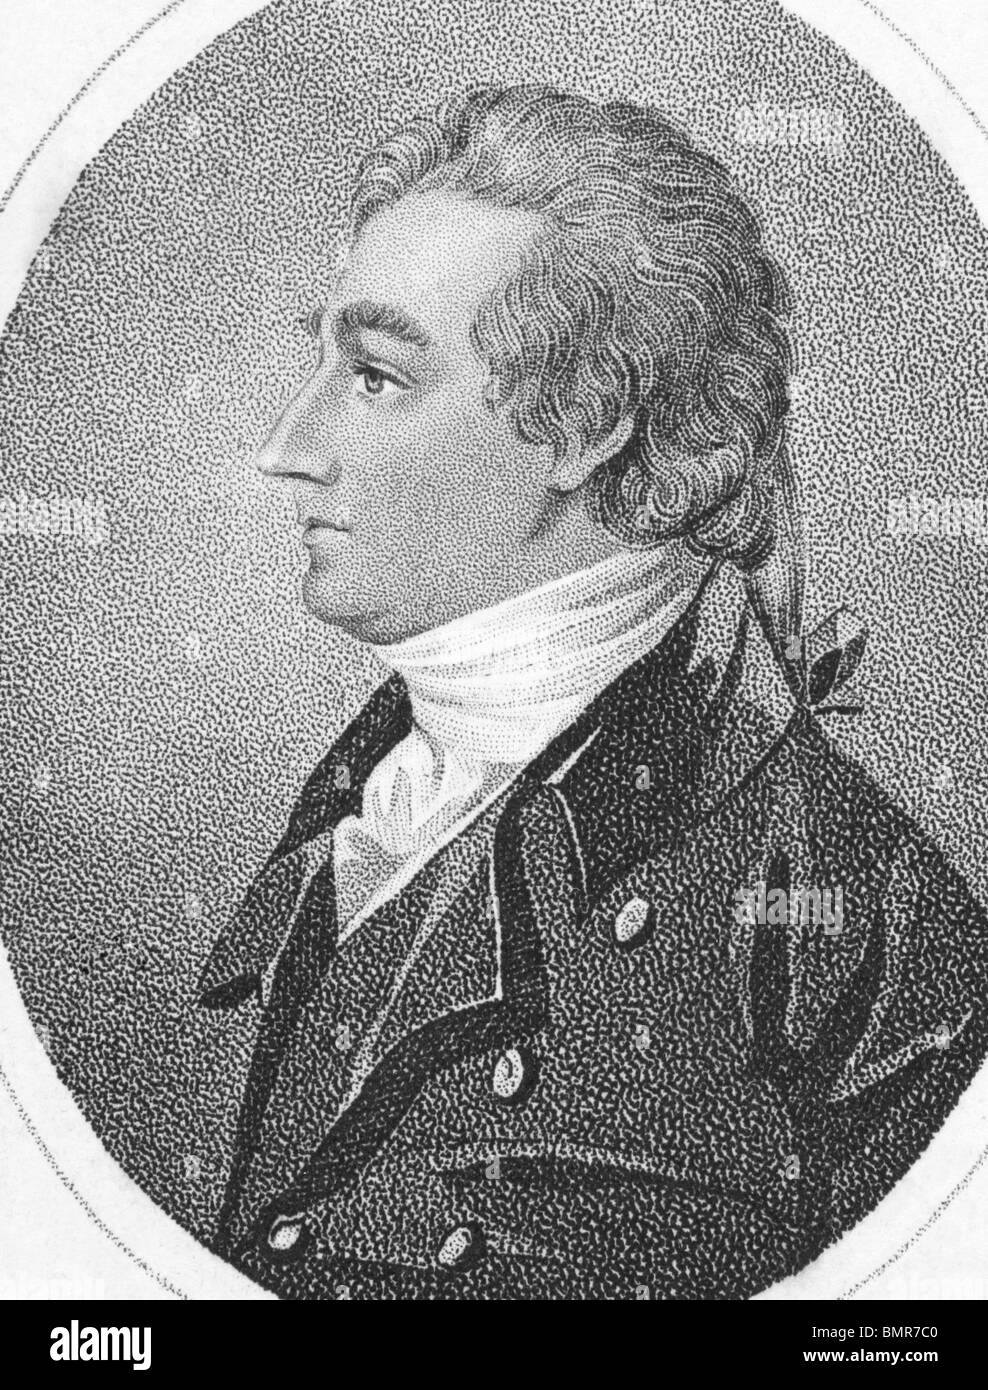 Joseph Shepherd Munden (1758-1832) on engraving from the 1800s. English actor. Stock Photo